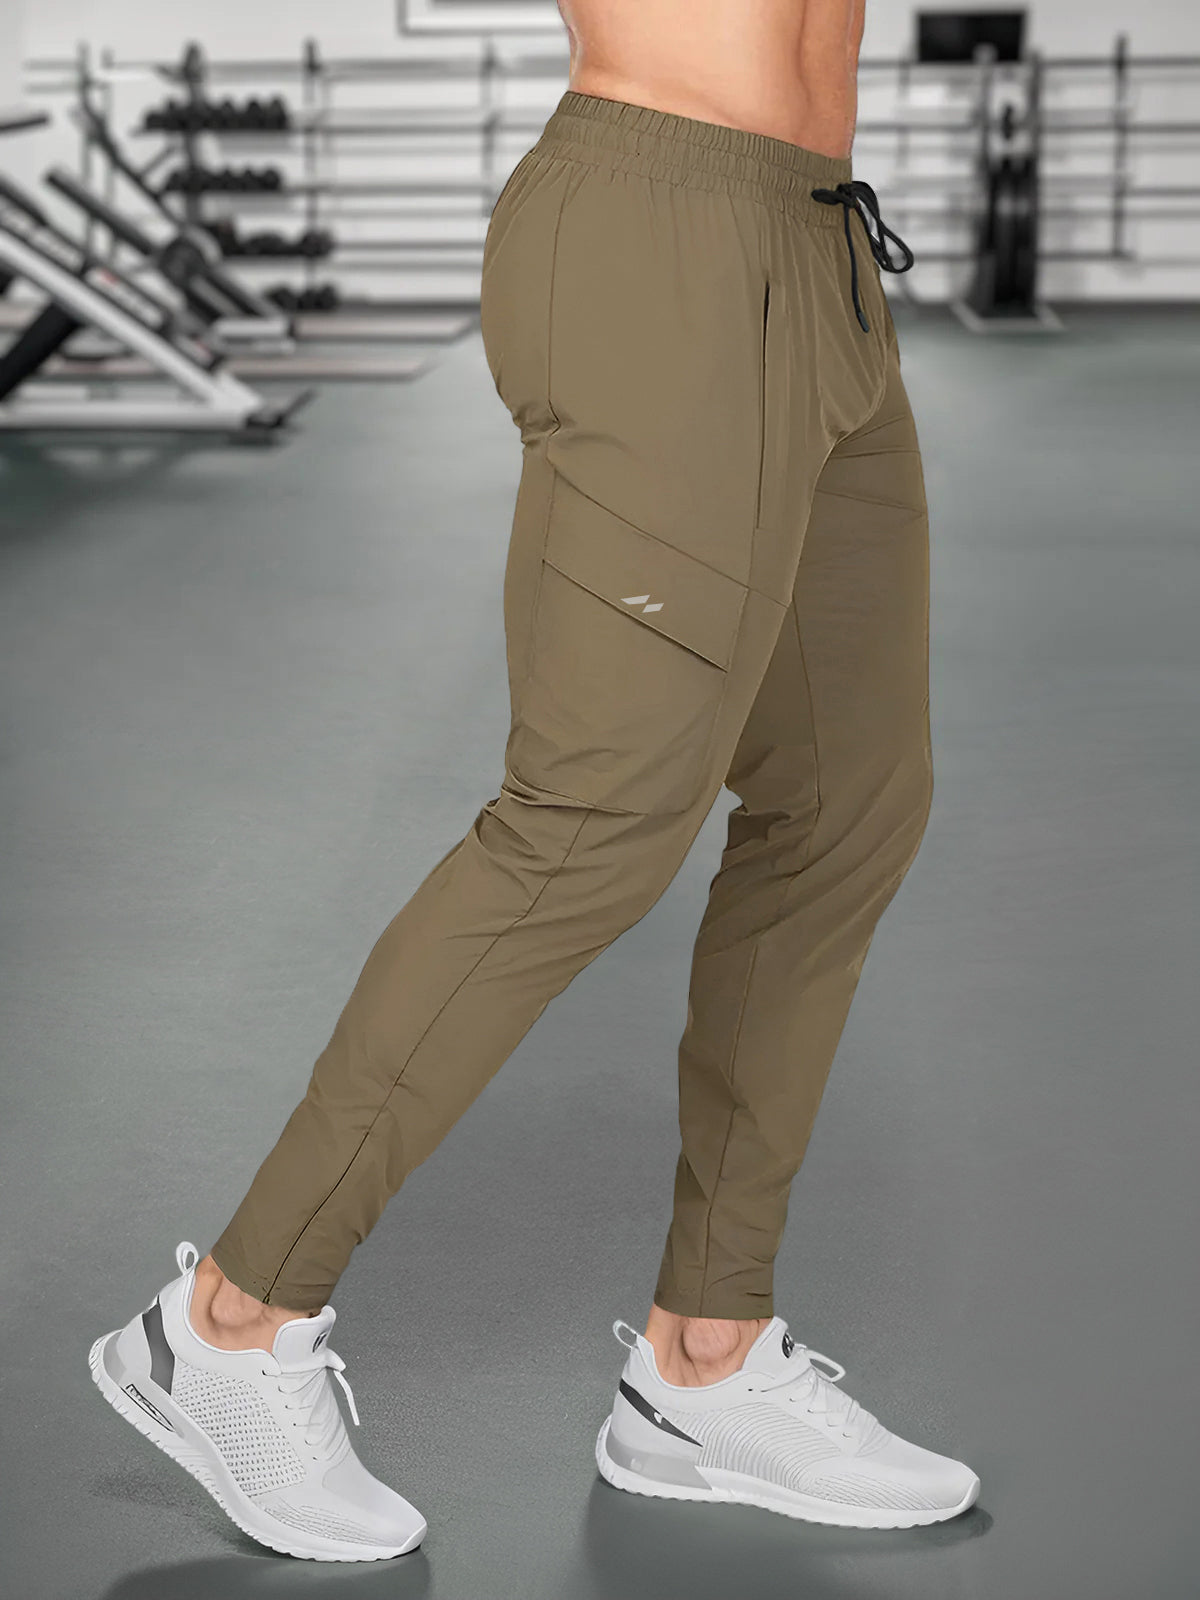 Snow-Grass Unisex Fast Dry Stretch Pants, High Stretch Quick Dry Pants |  eBay